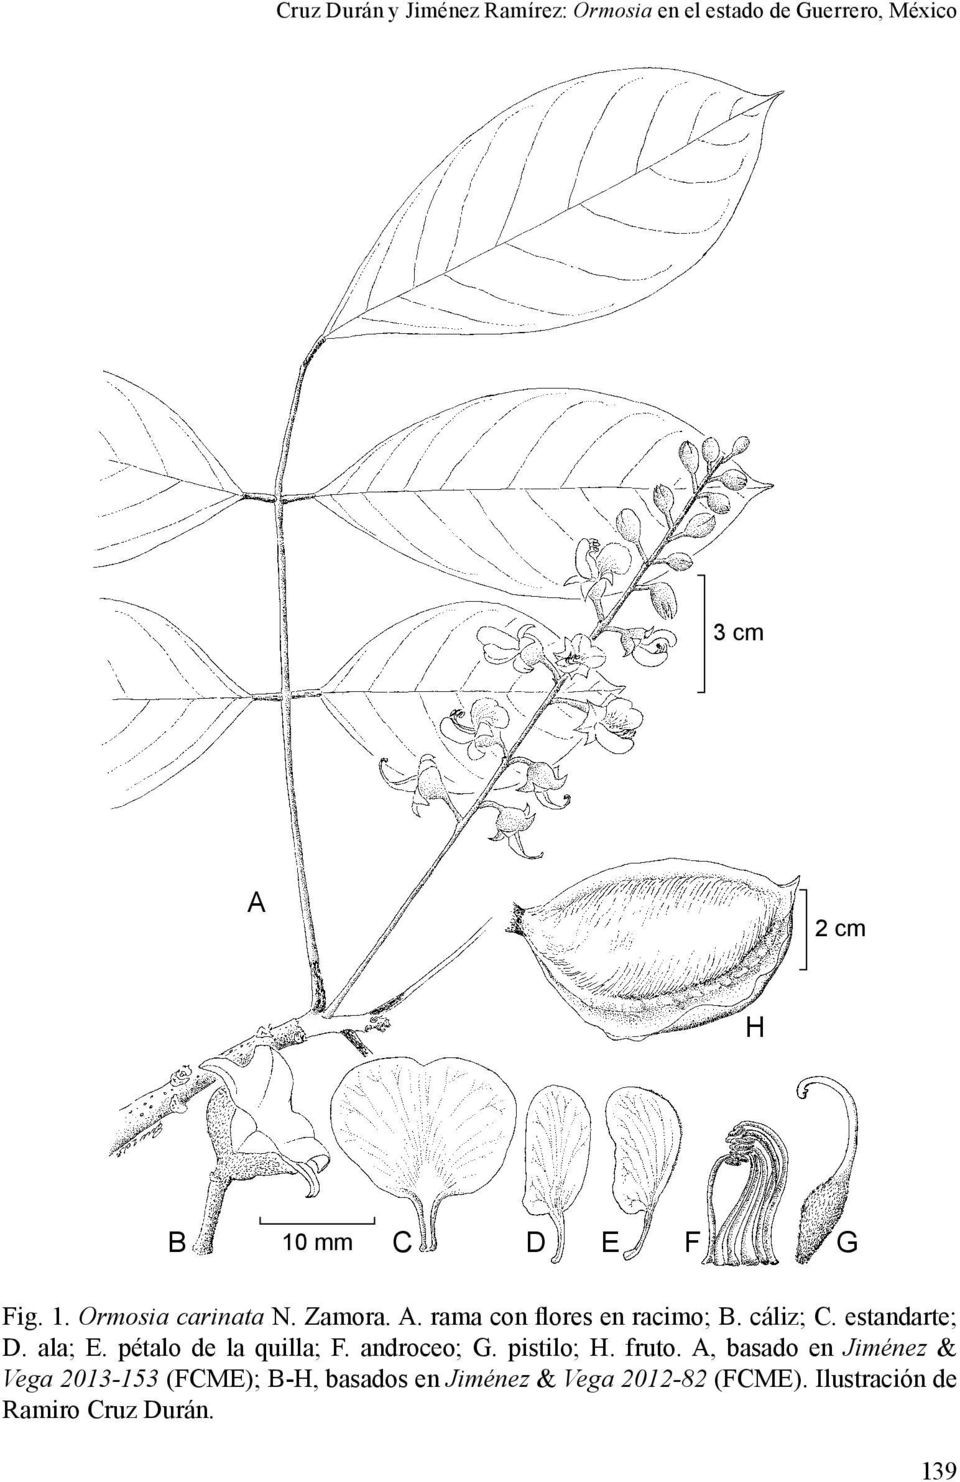 estandarte; D. ala; E. pétalo de la quilla; F. androceo; G. pistilo; H. fruto.